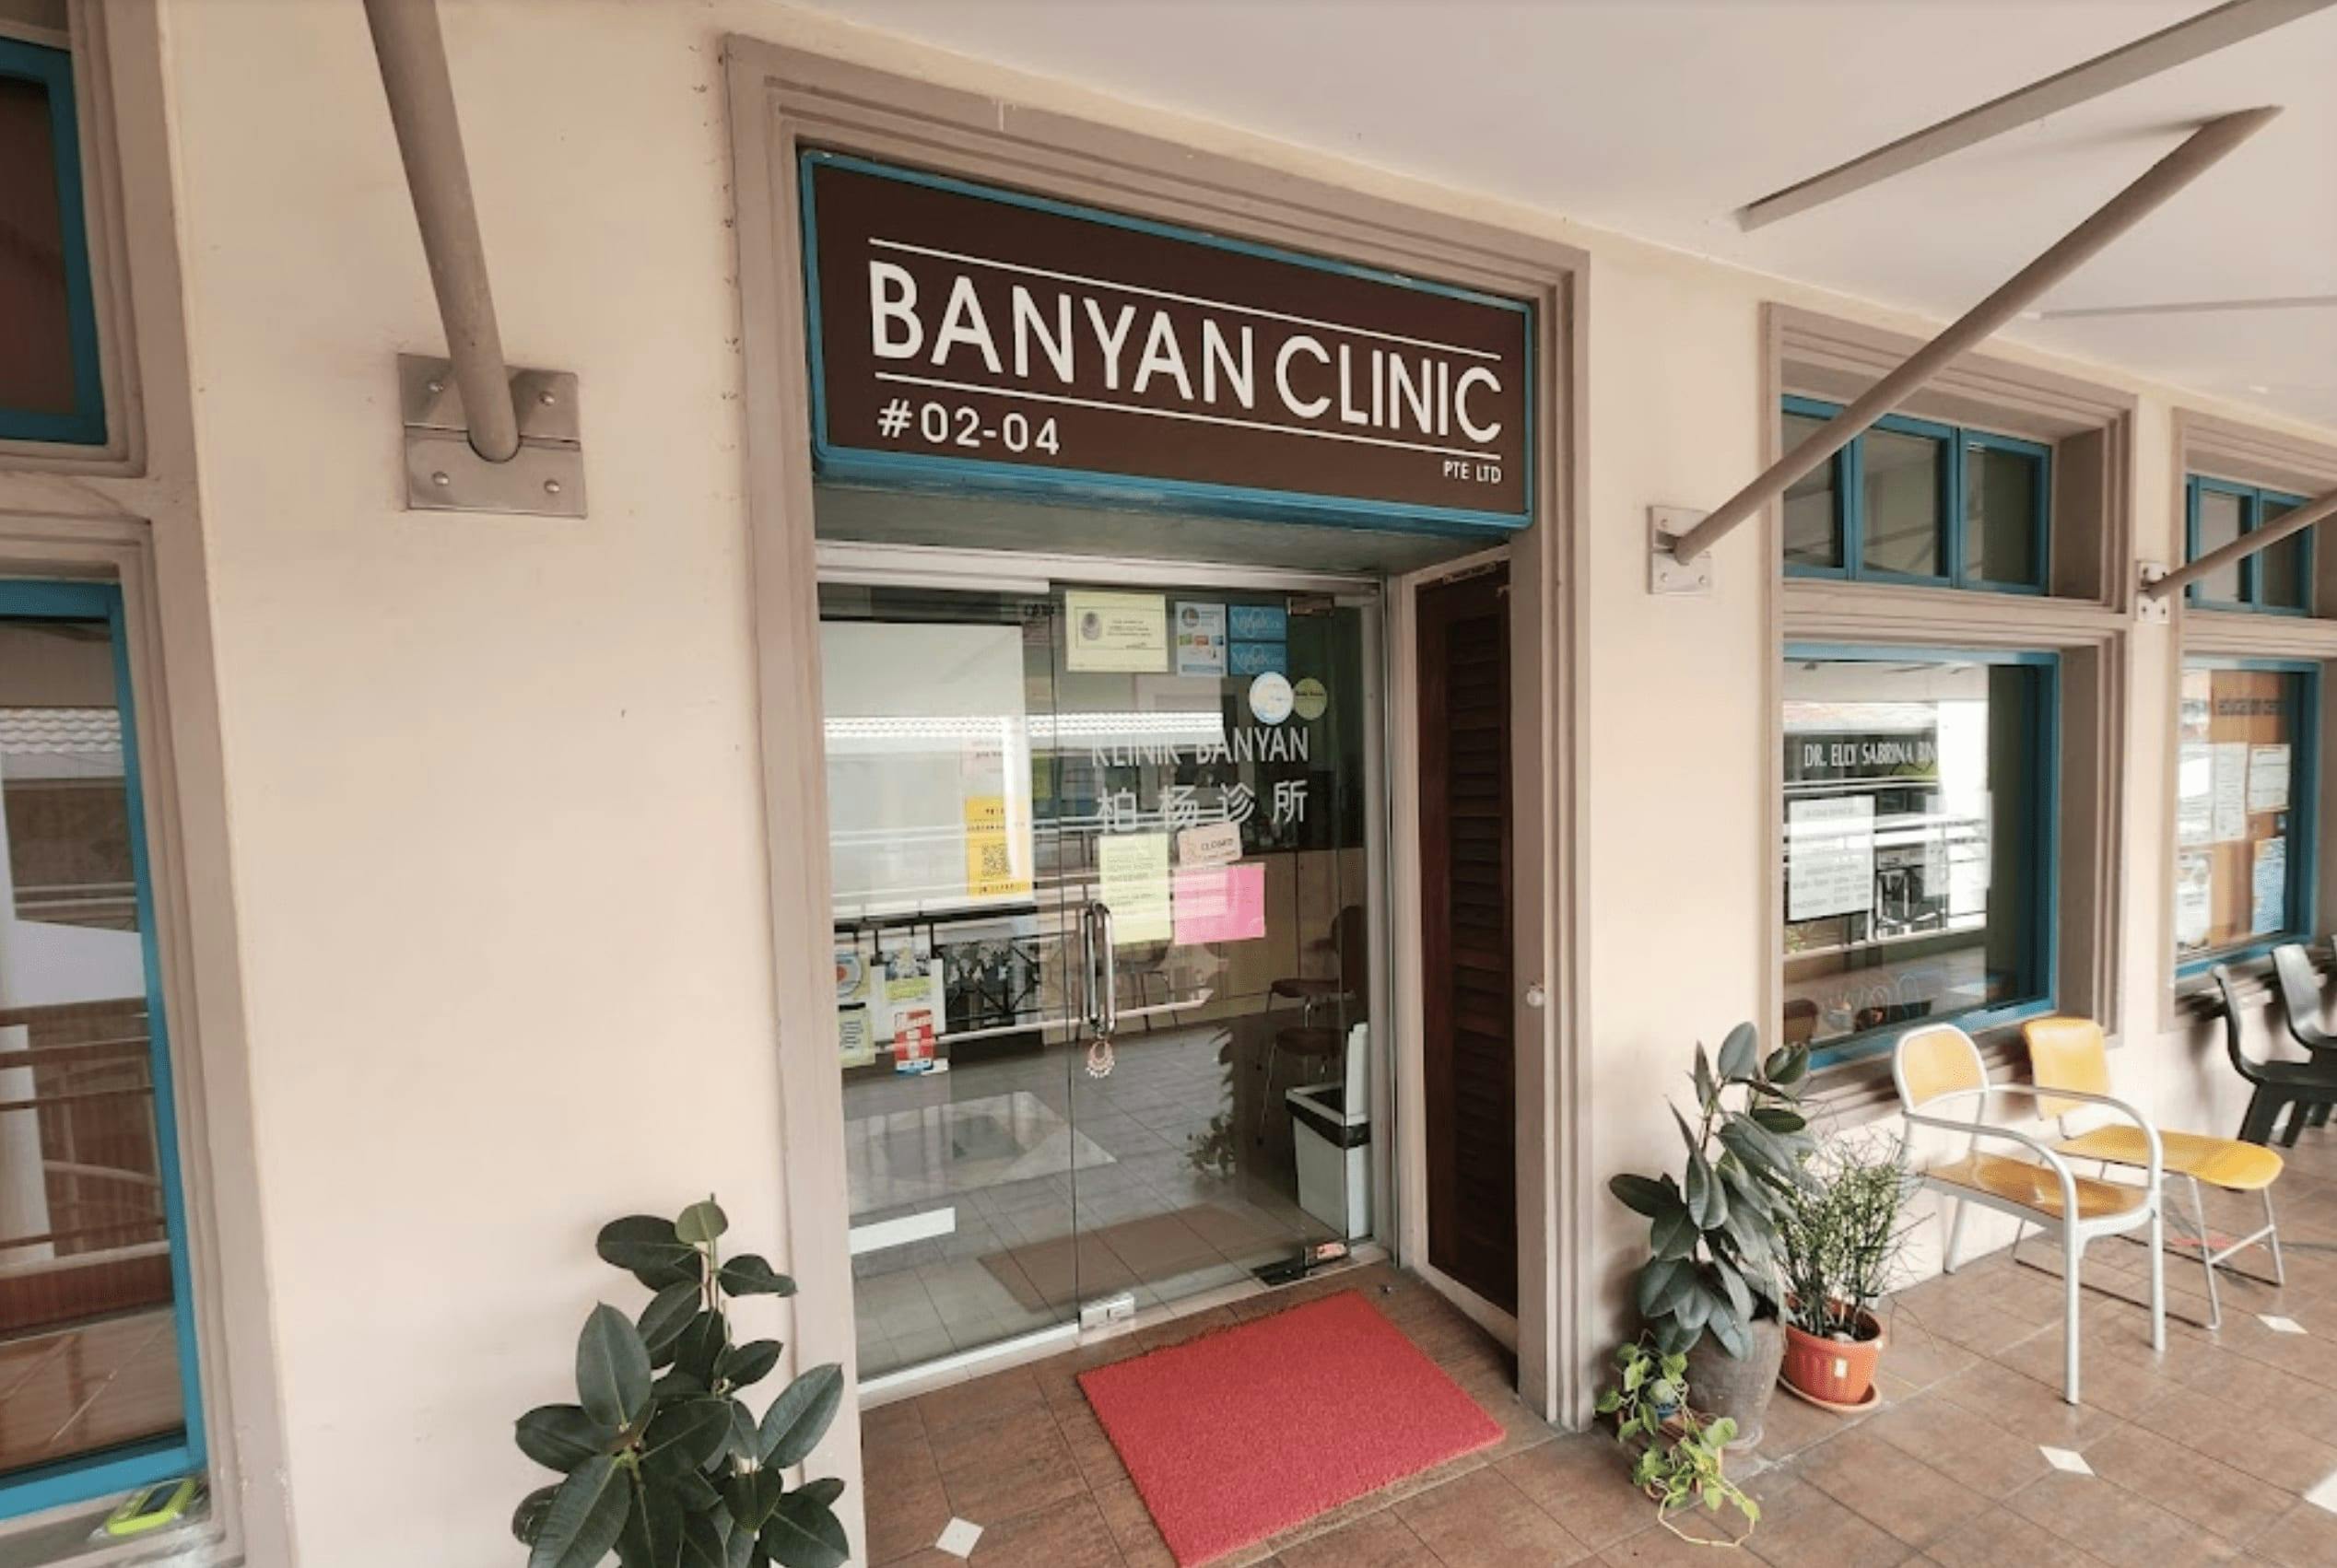 Banyan Clinic Pte Ltd